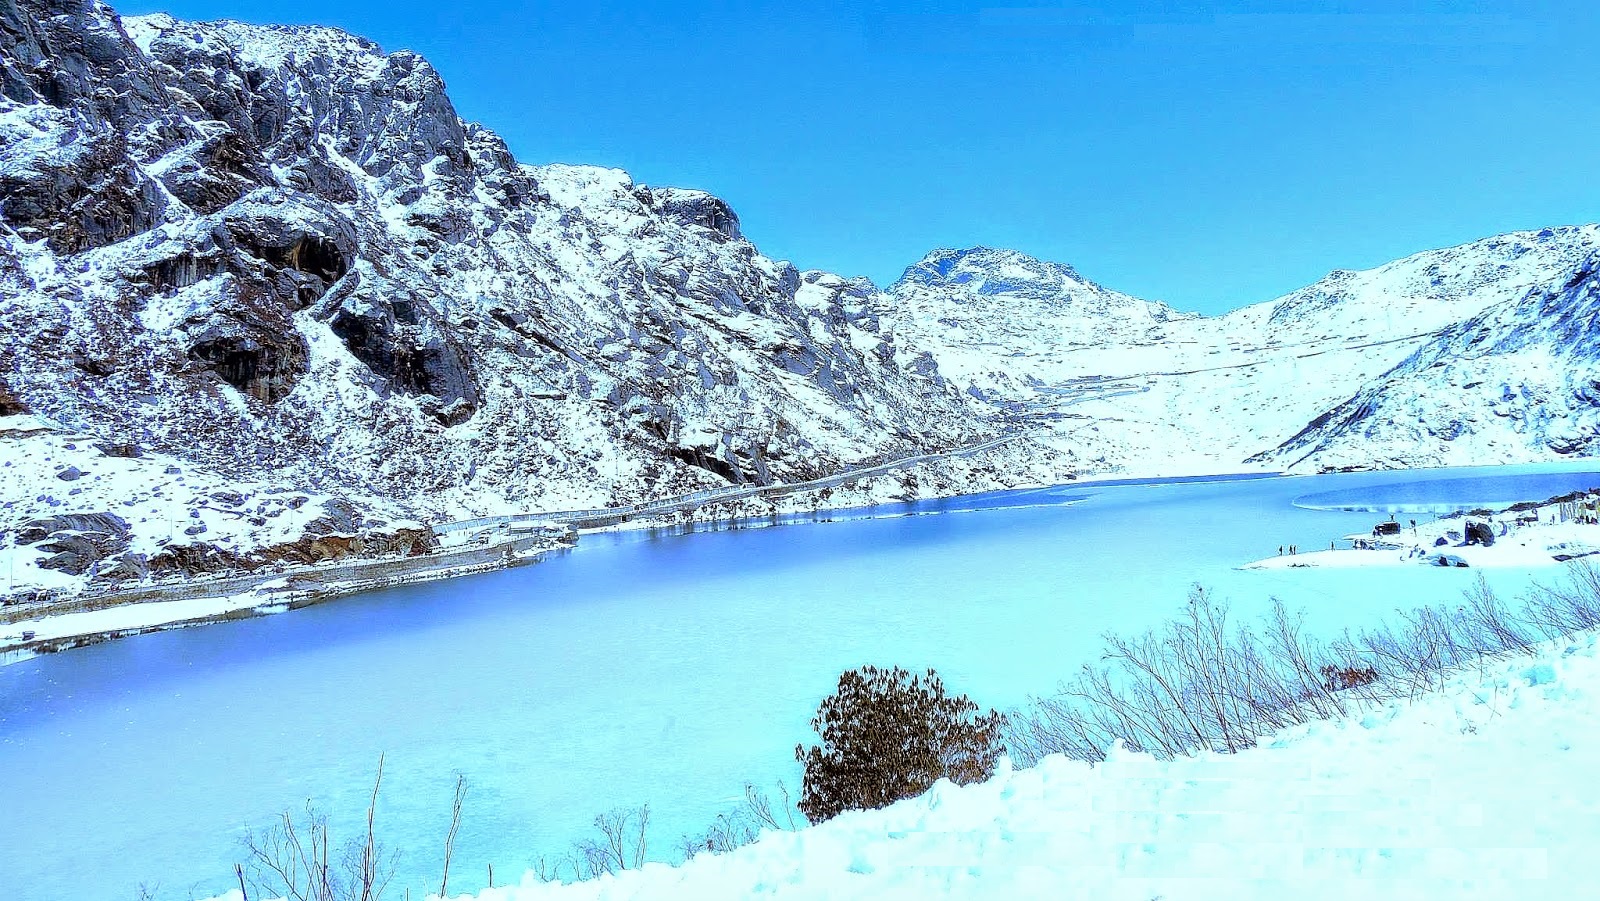 tso lhamo lake - top frozen lakes in india